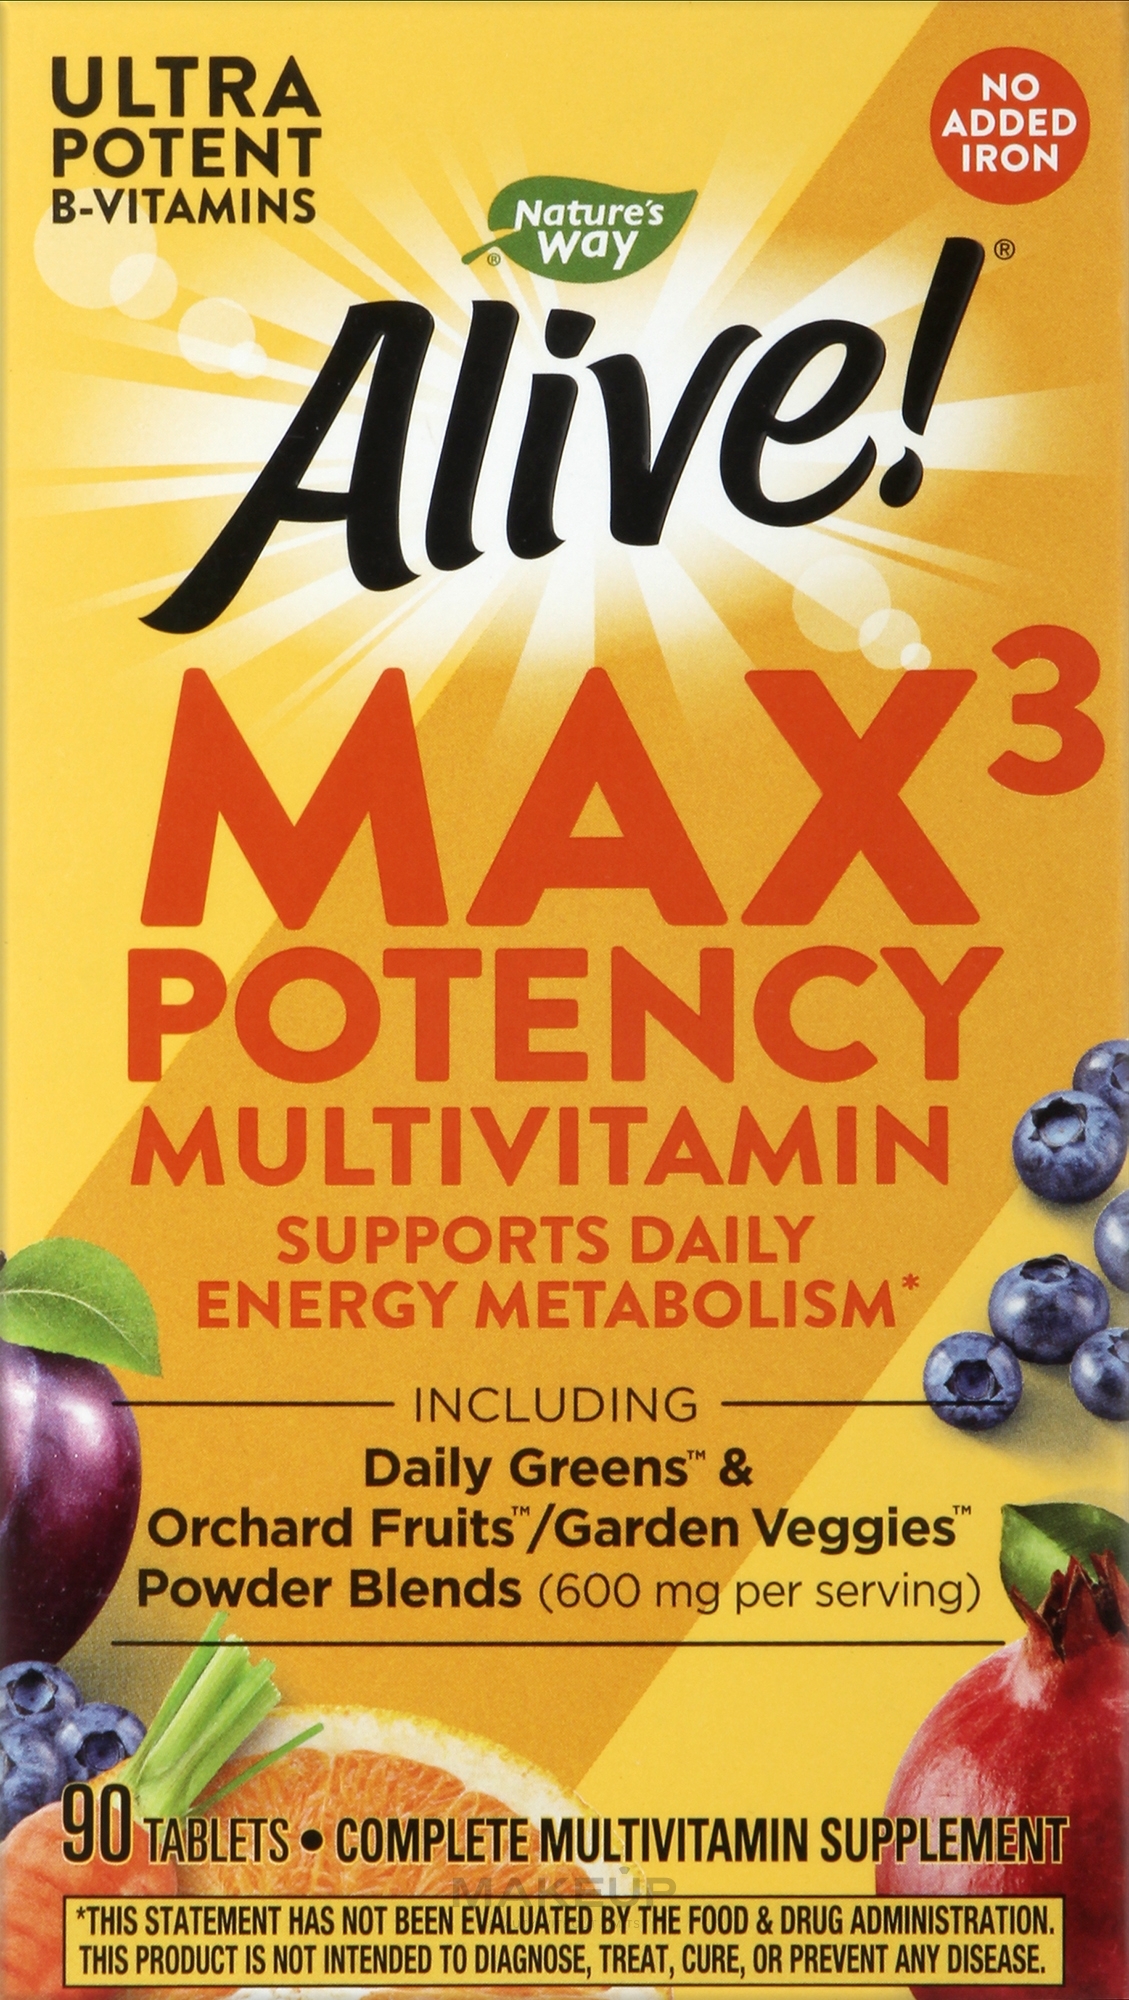 УЦЕНКА Мультивитамины - Nature’s Way Alive! Max3 Daily Multi-Vitamin Without Iron * — фото 90шт